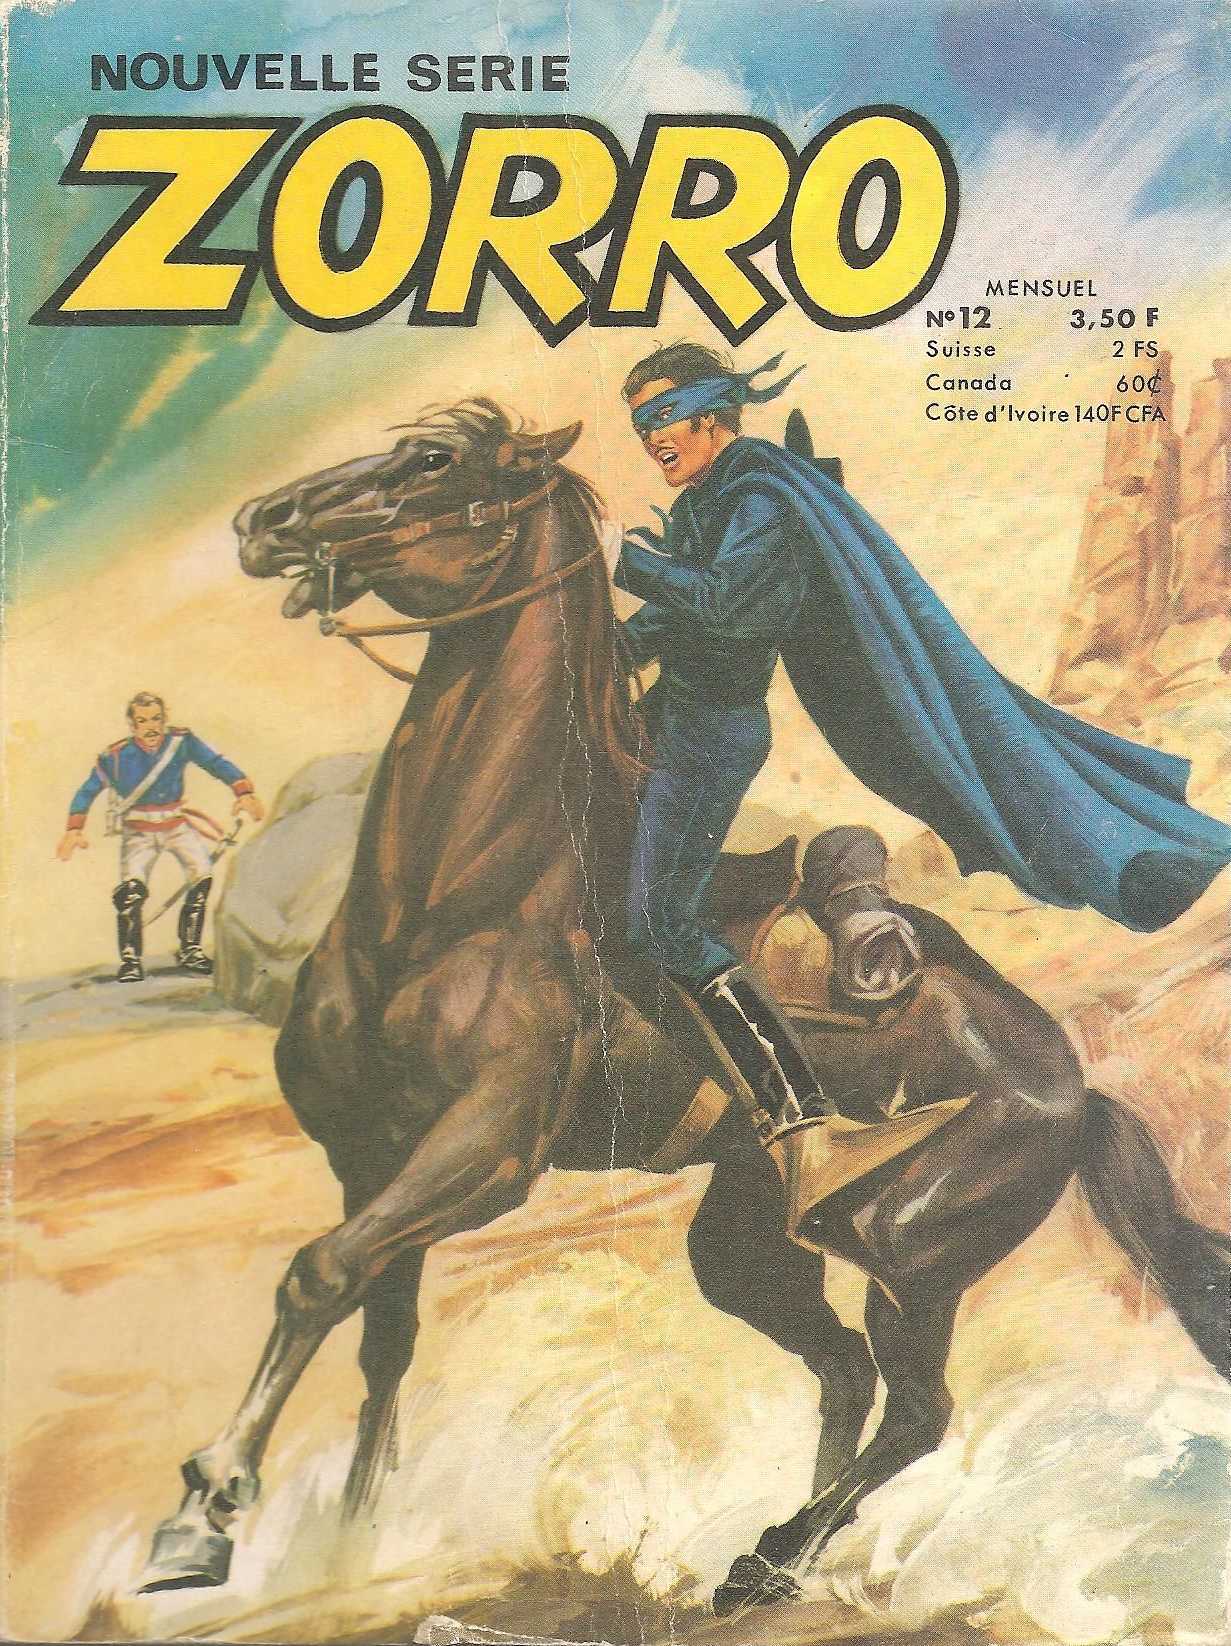 Scan de la Couverture Zorro Nouvelle Serie SFPI n 12